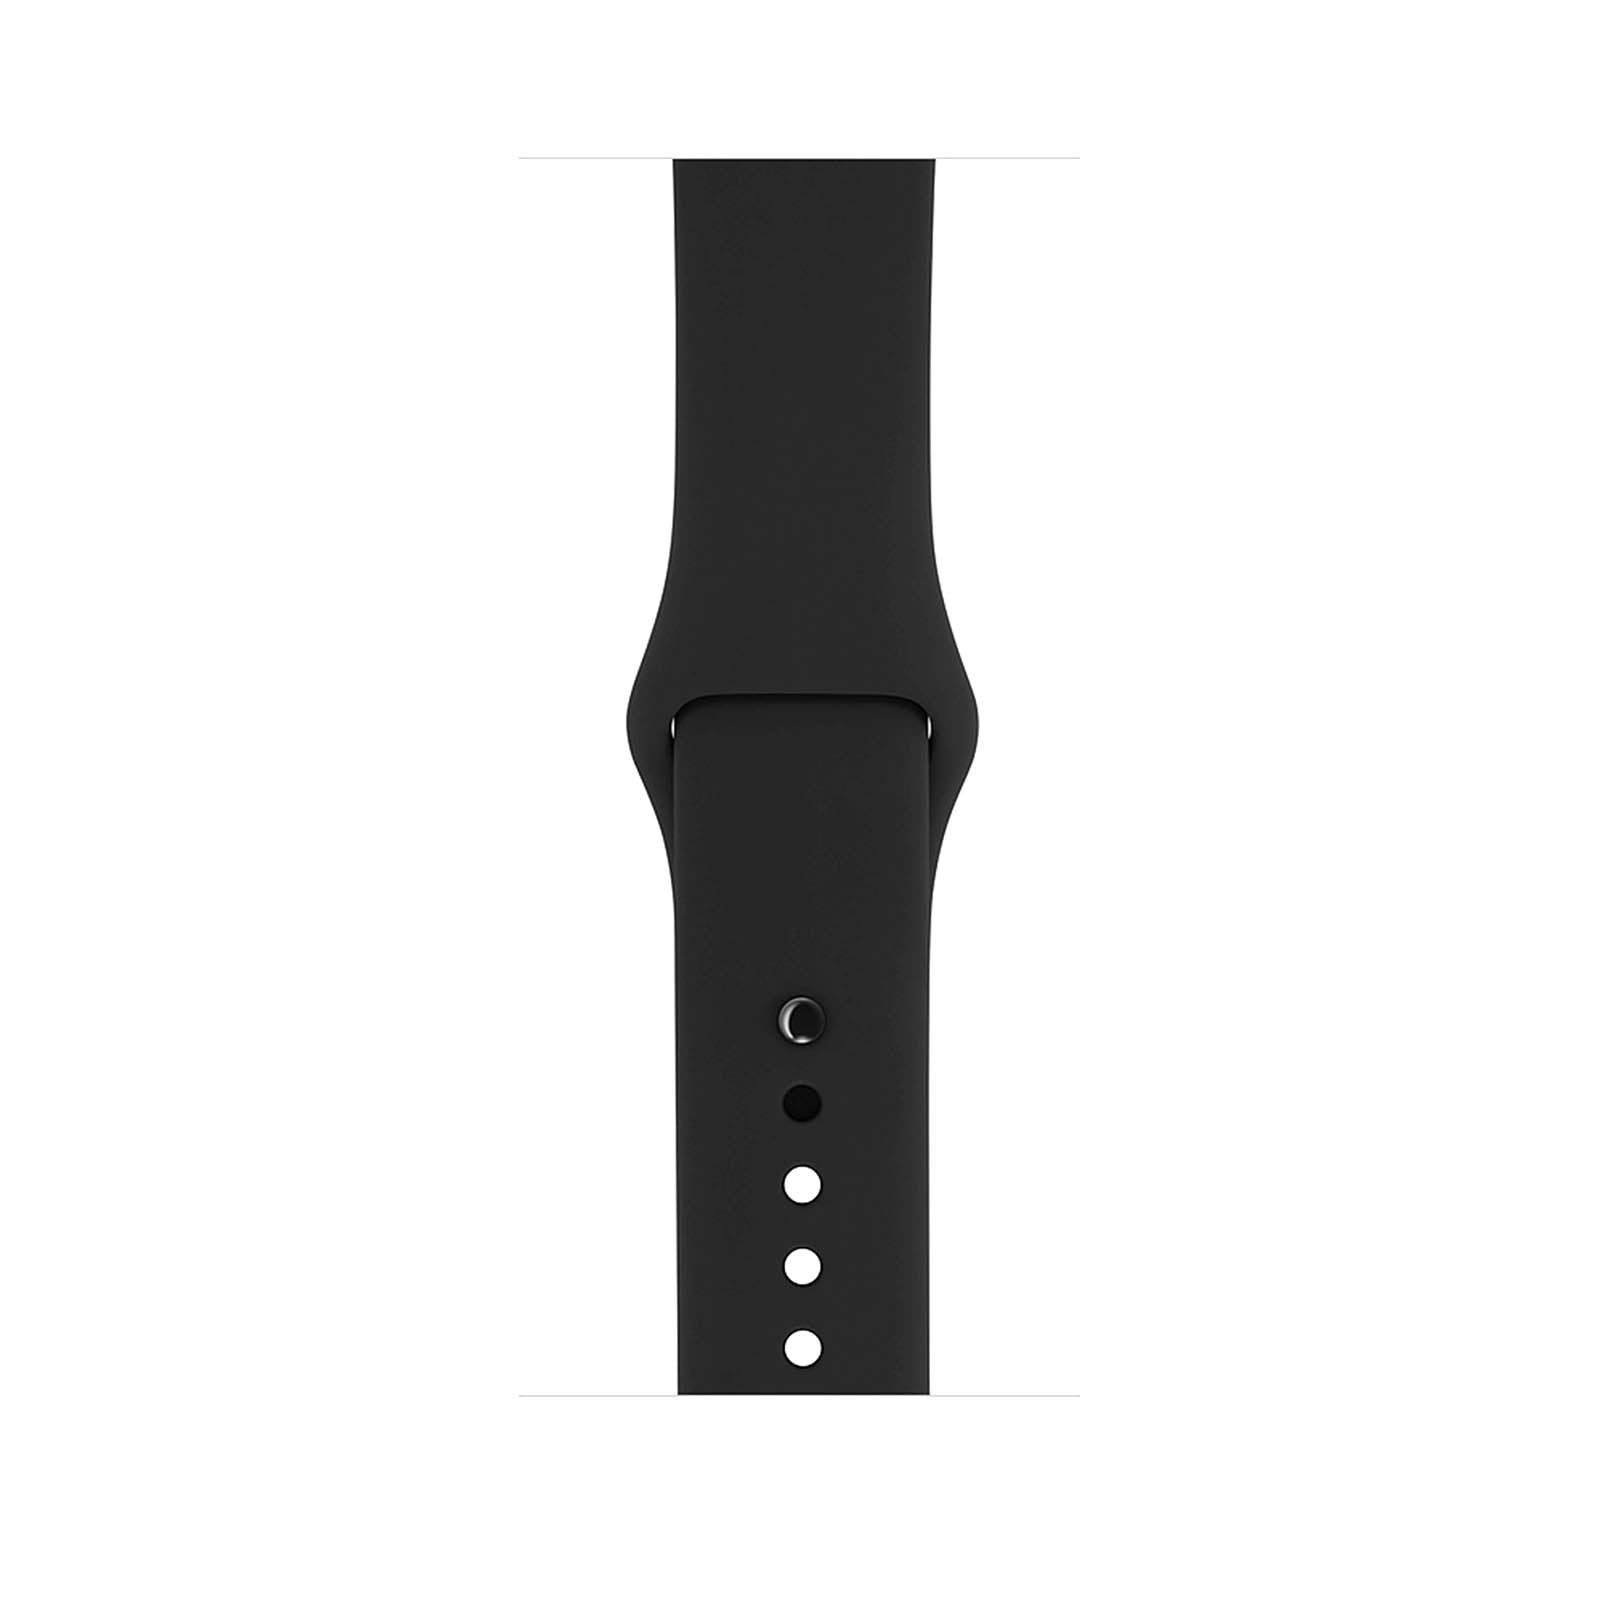 Apple Watch Series 4 Stainless 44mm Black Good Cellular - Unlocked